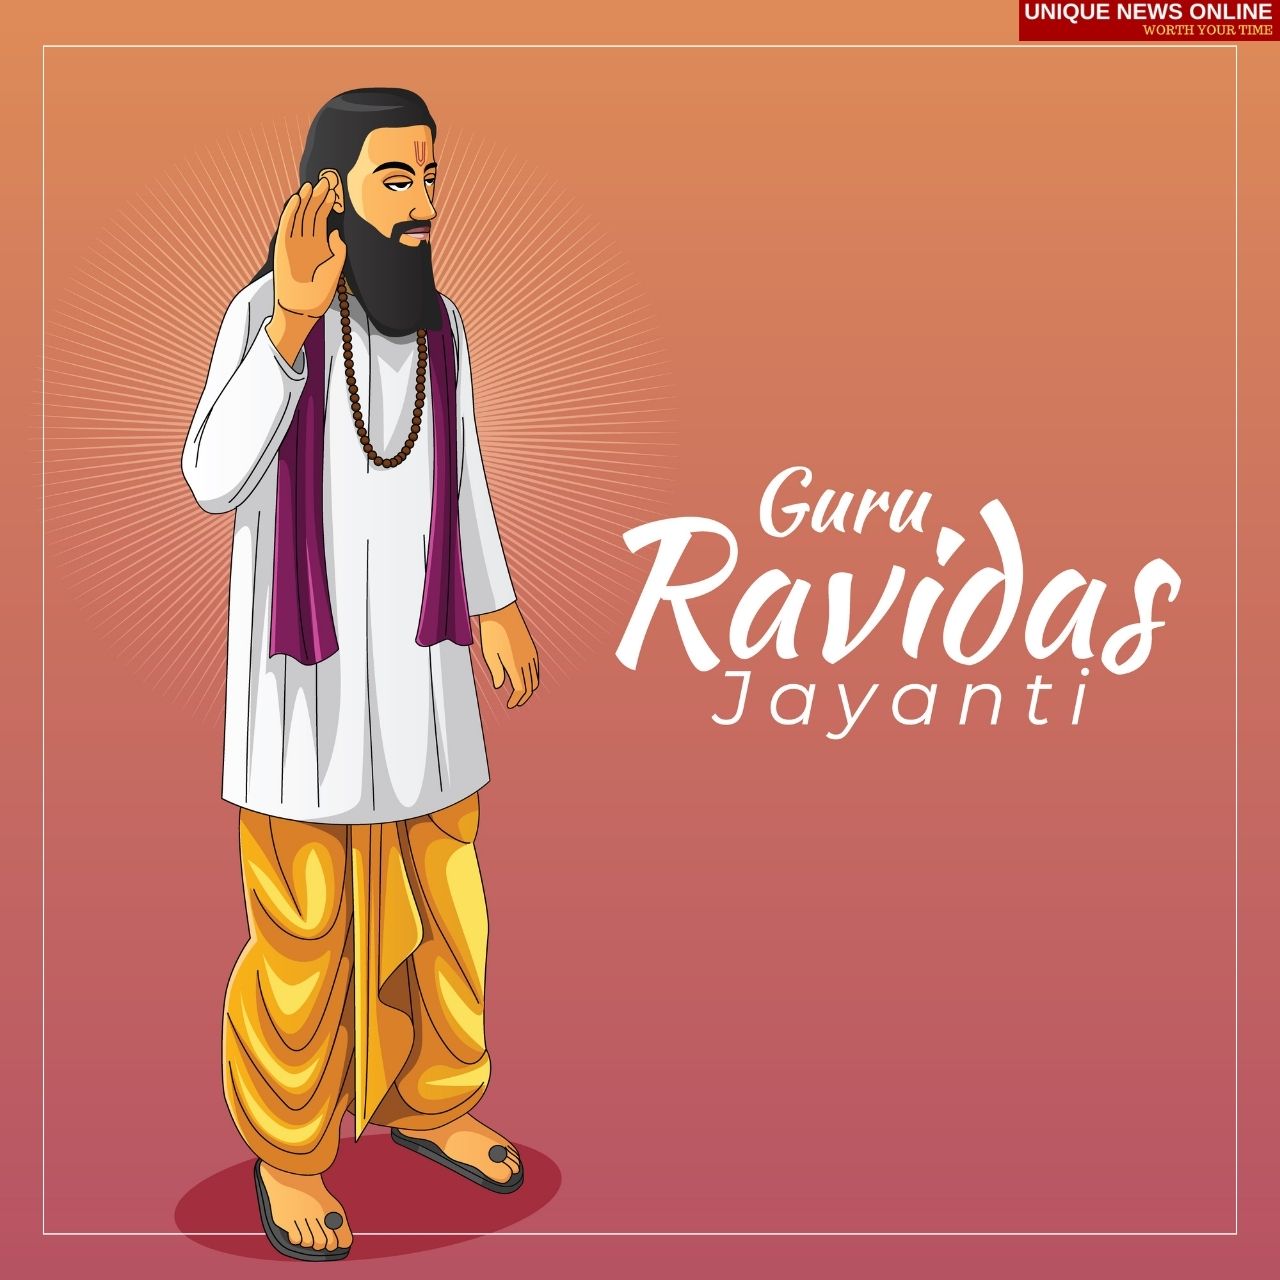 Happy Guru Ravidas Jayanti 2022 Wishes, Greetings, HD Images, Messages, Wallpaper, Quotes, Shayari, and WhatsApp Status Video to Share